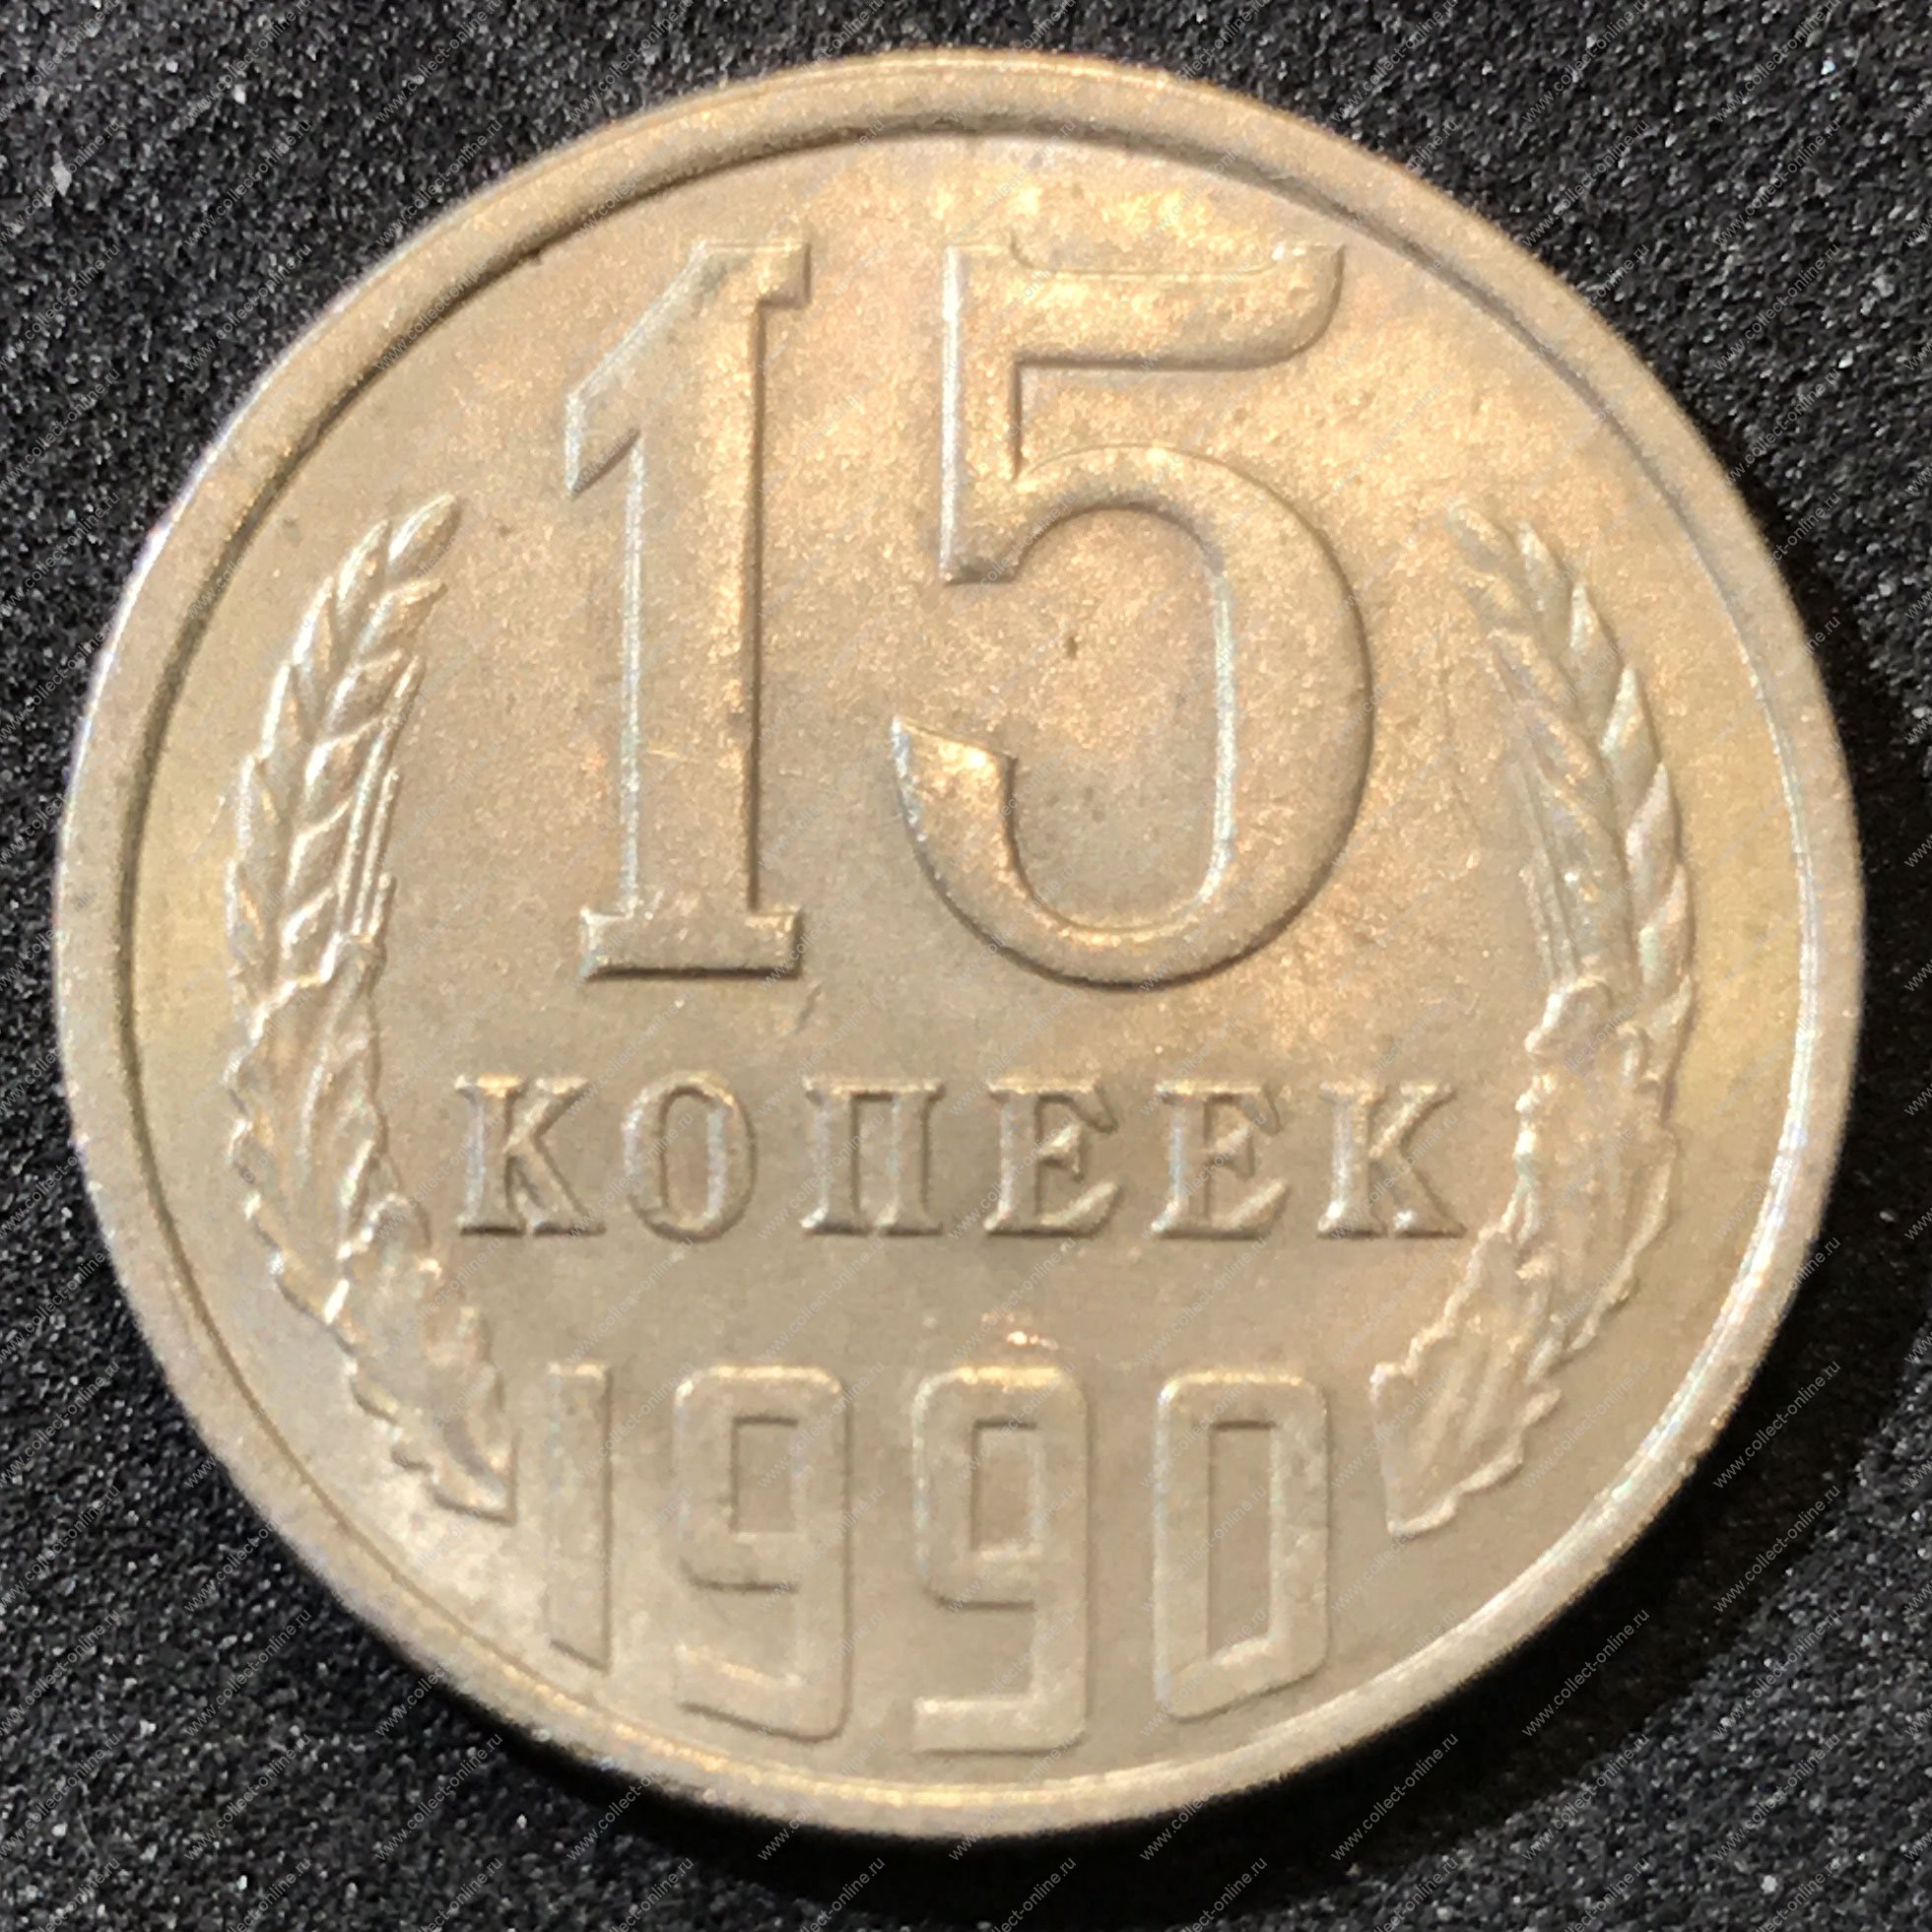 15 копеек 1961. Монеты СССР 1961. 15 Копеек СССР 1961 года. Монета 15 копеек 1978.